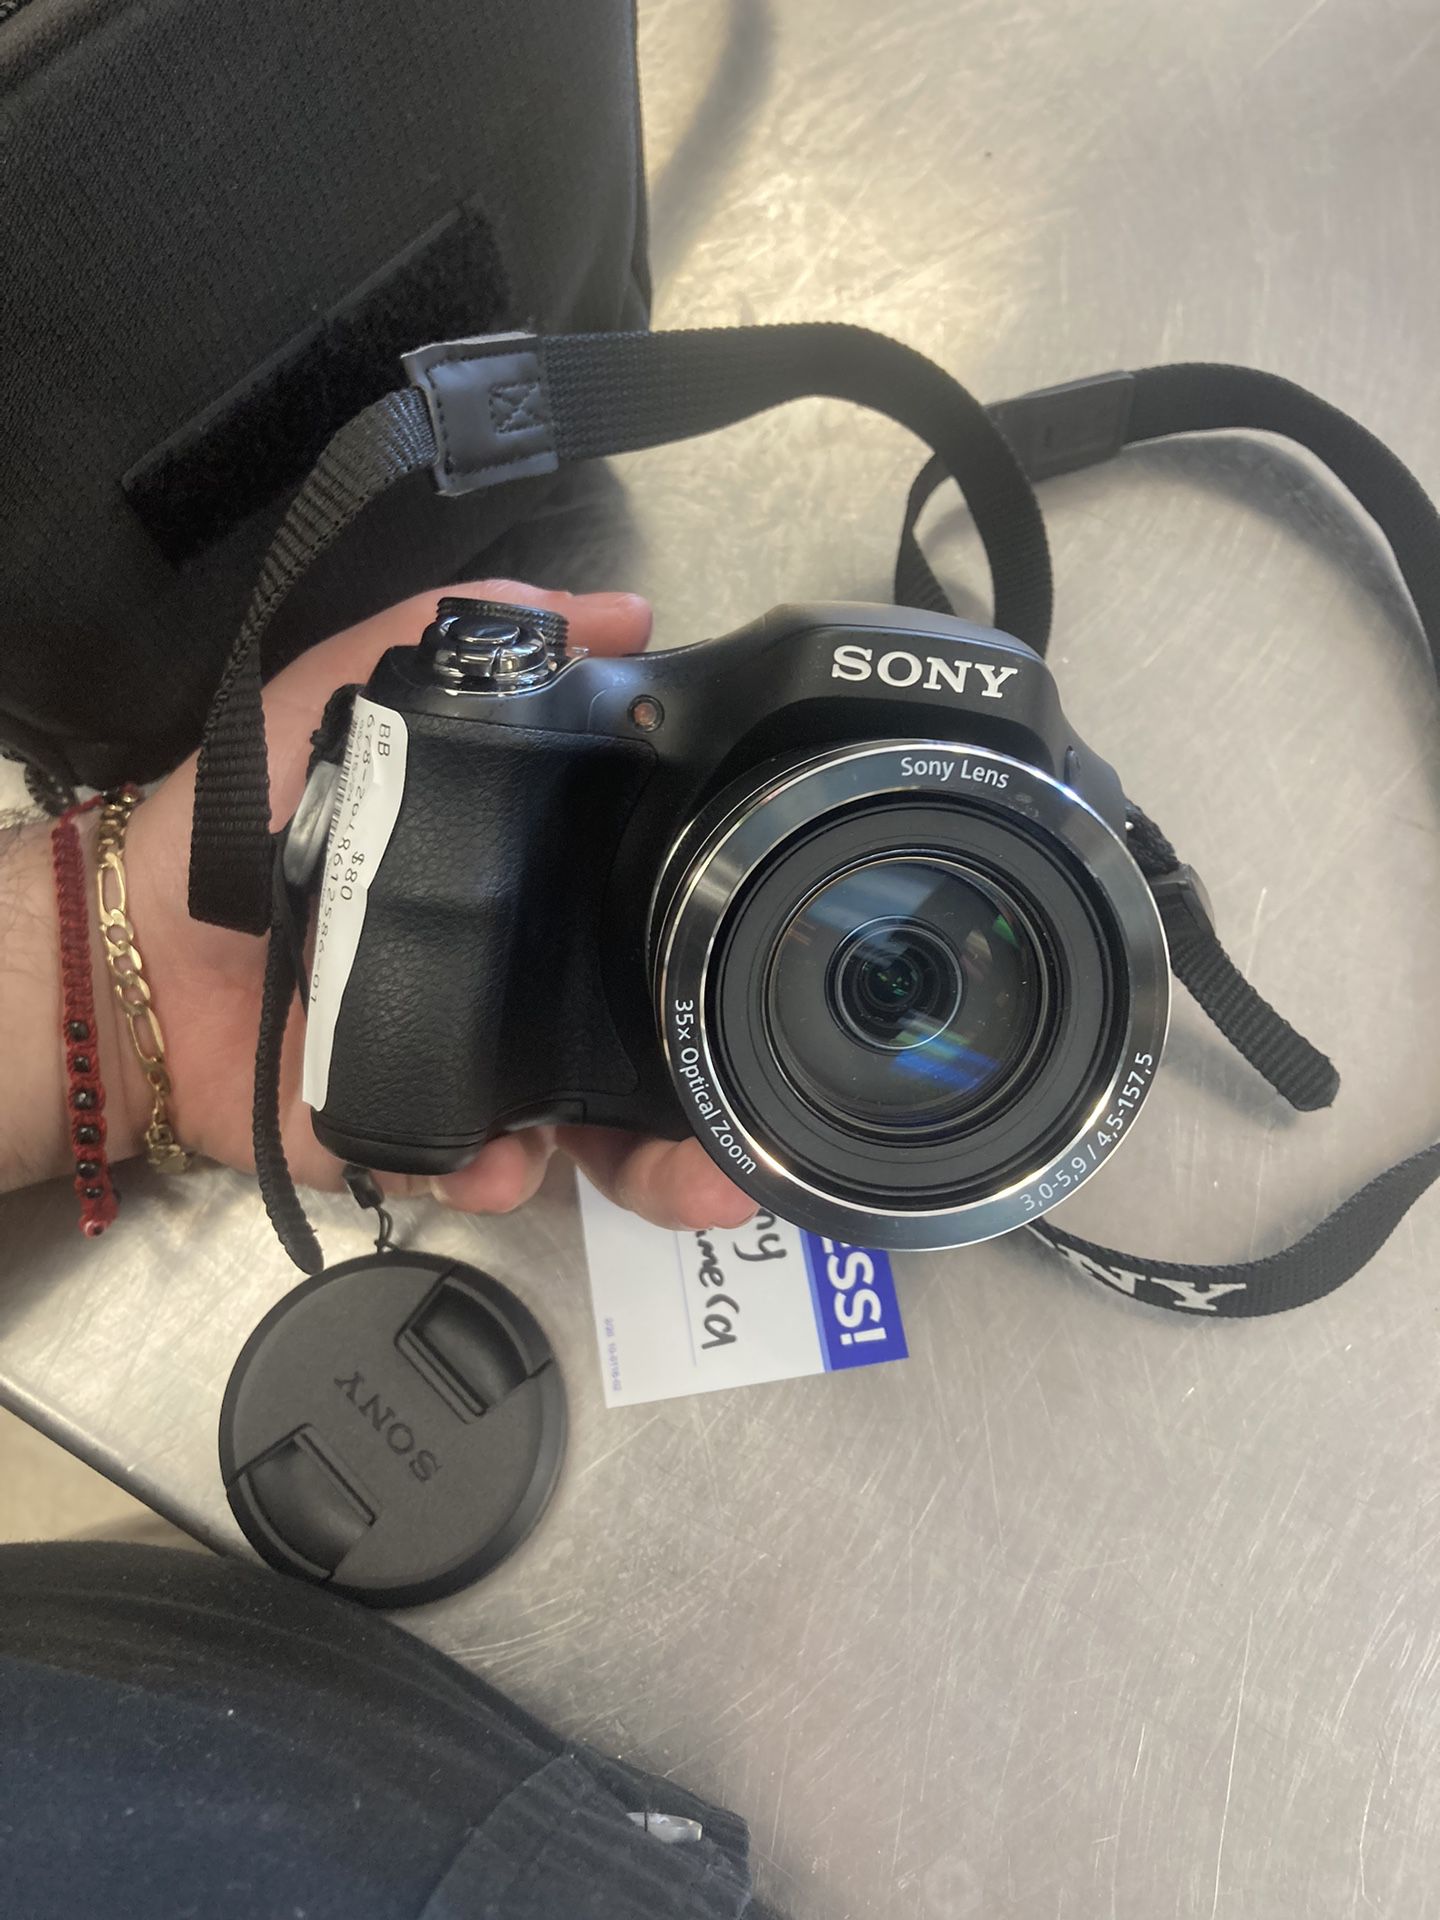 Sony Camera And Bag 